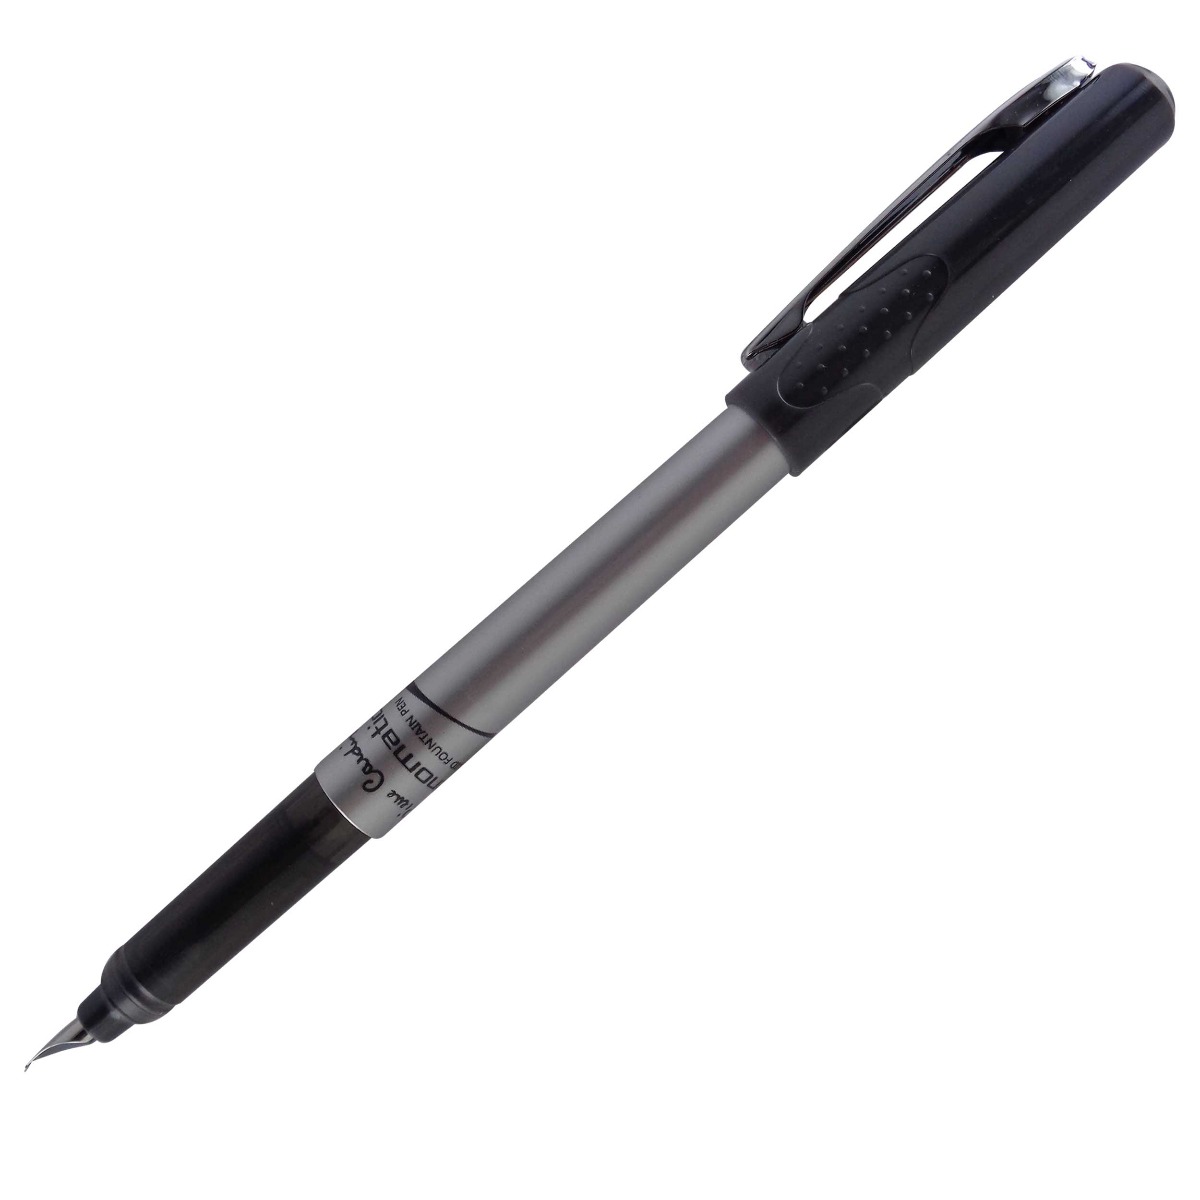 Pierre cardin penOmatic  Model: 14030 Grey color body Black Olive color cap  cartridge fountain pen with a convertor